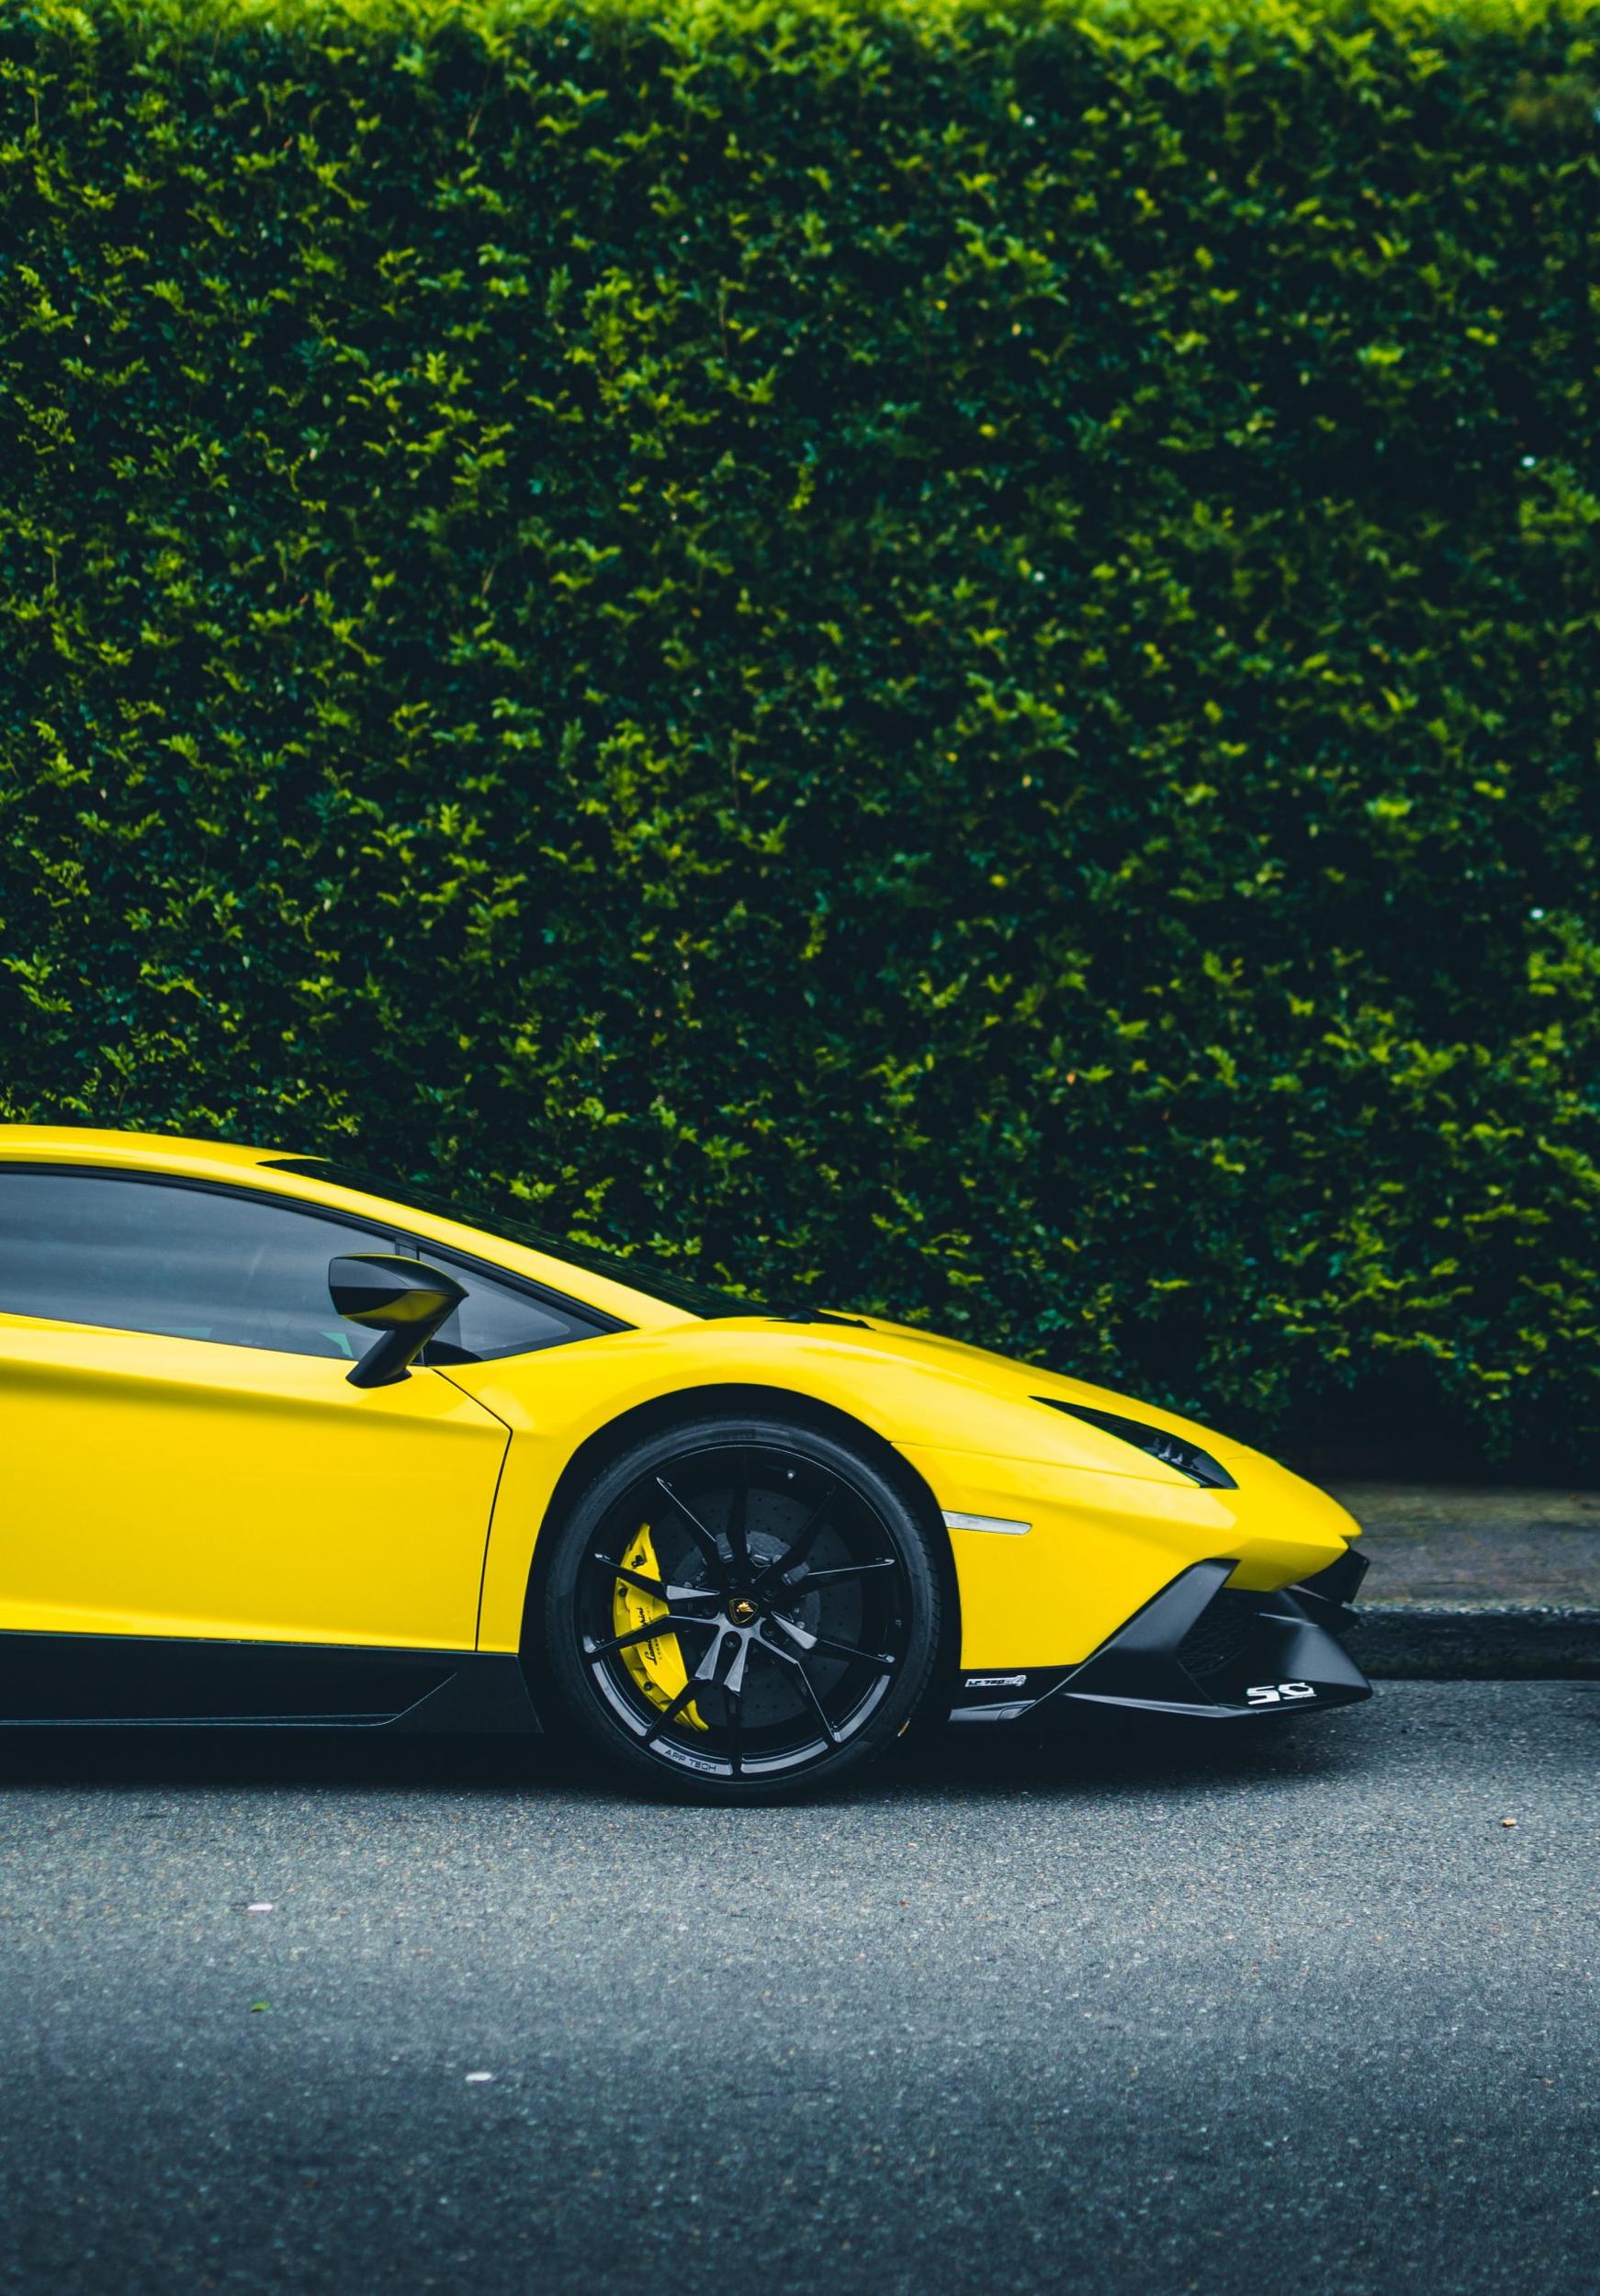 Lamborghini dealers